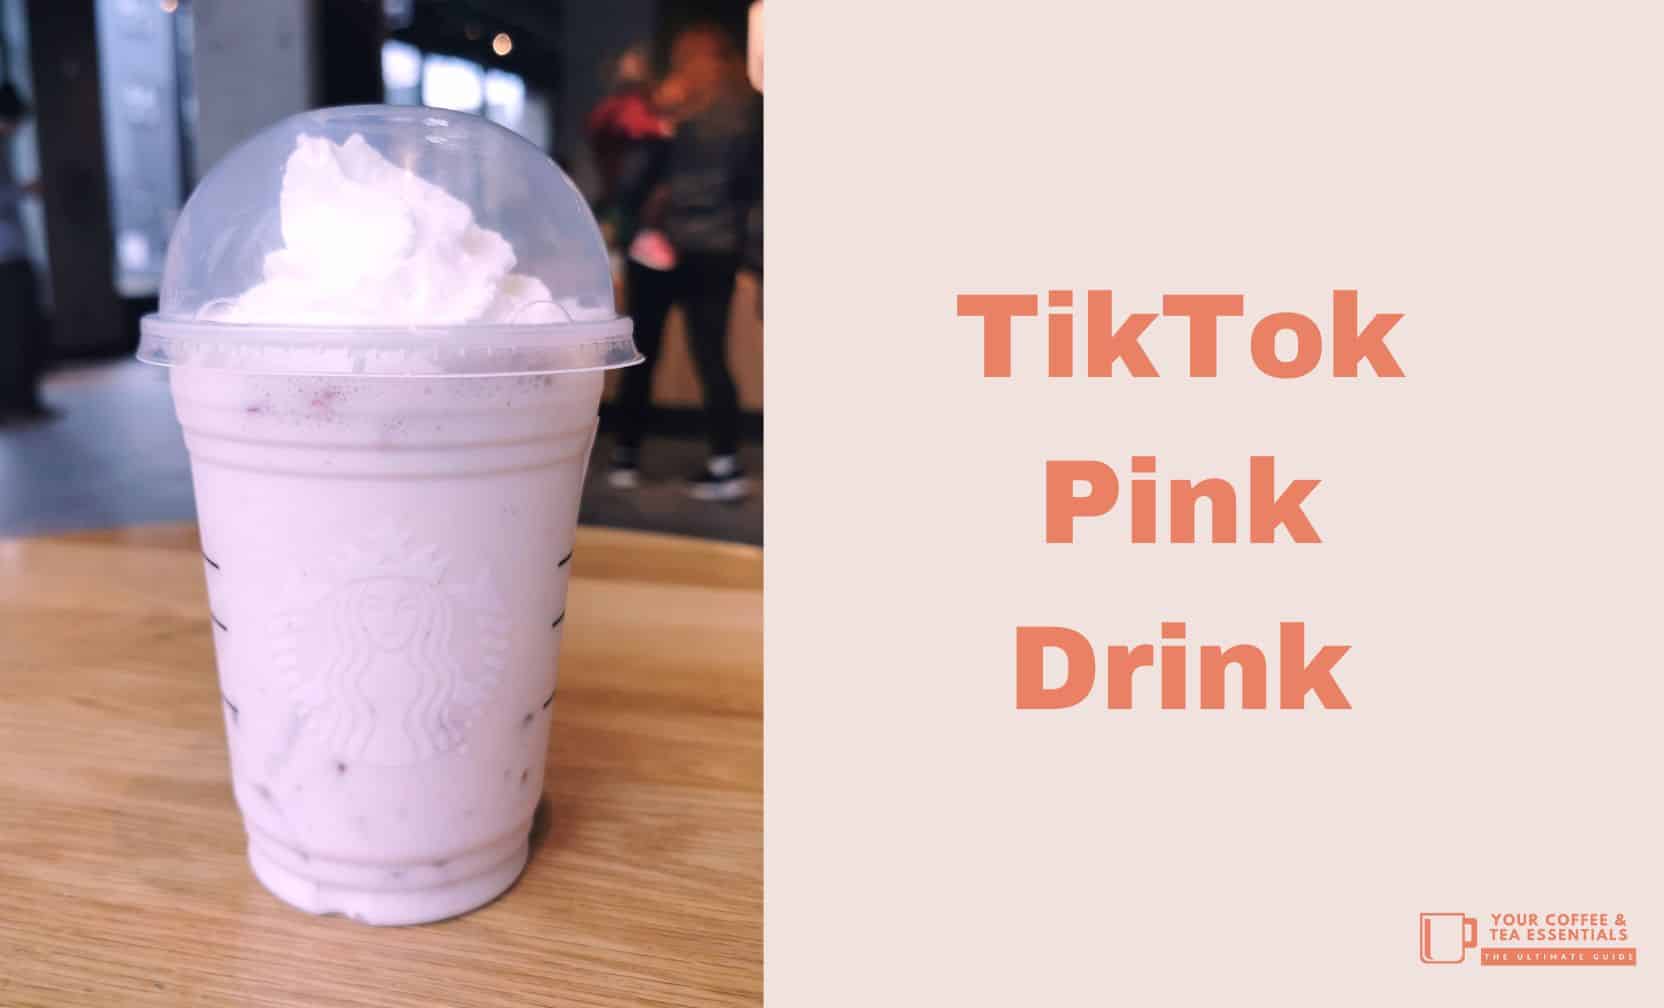 TikTok Pink Drink